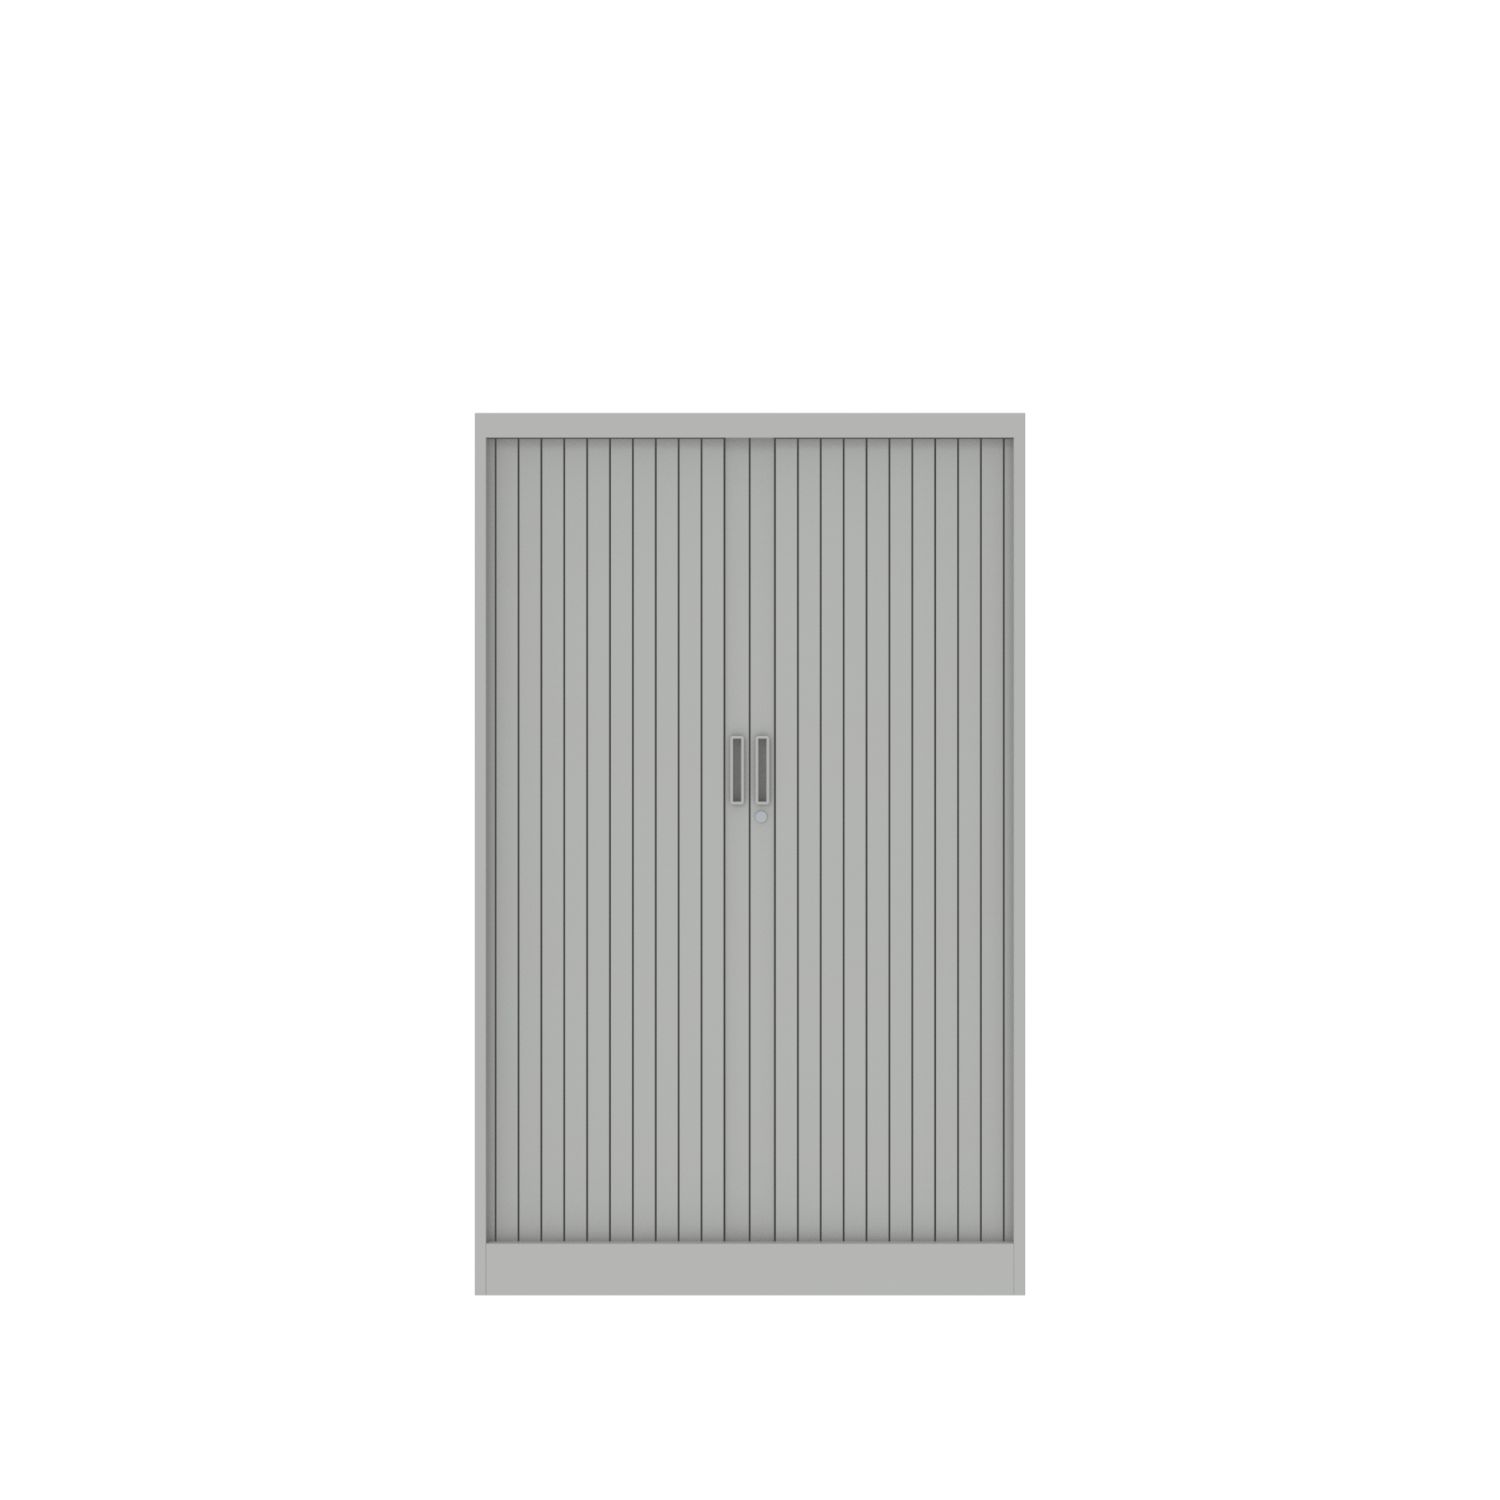 lensvelt design team tambour cabinet 100 cm 45 cm x 160 cm high base 3 shelves light grey ral7035